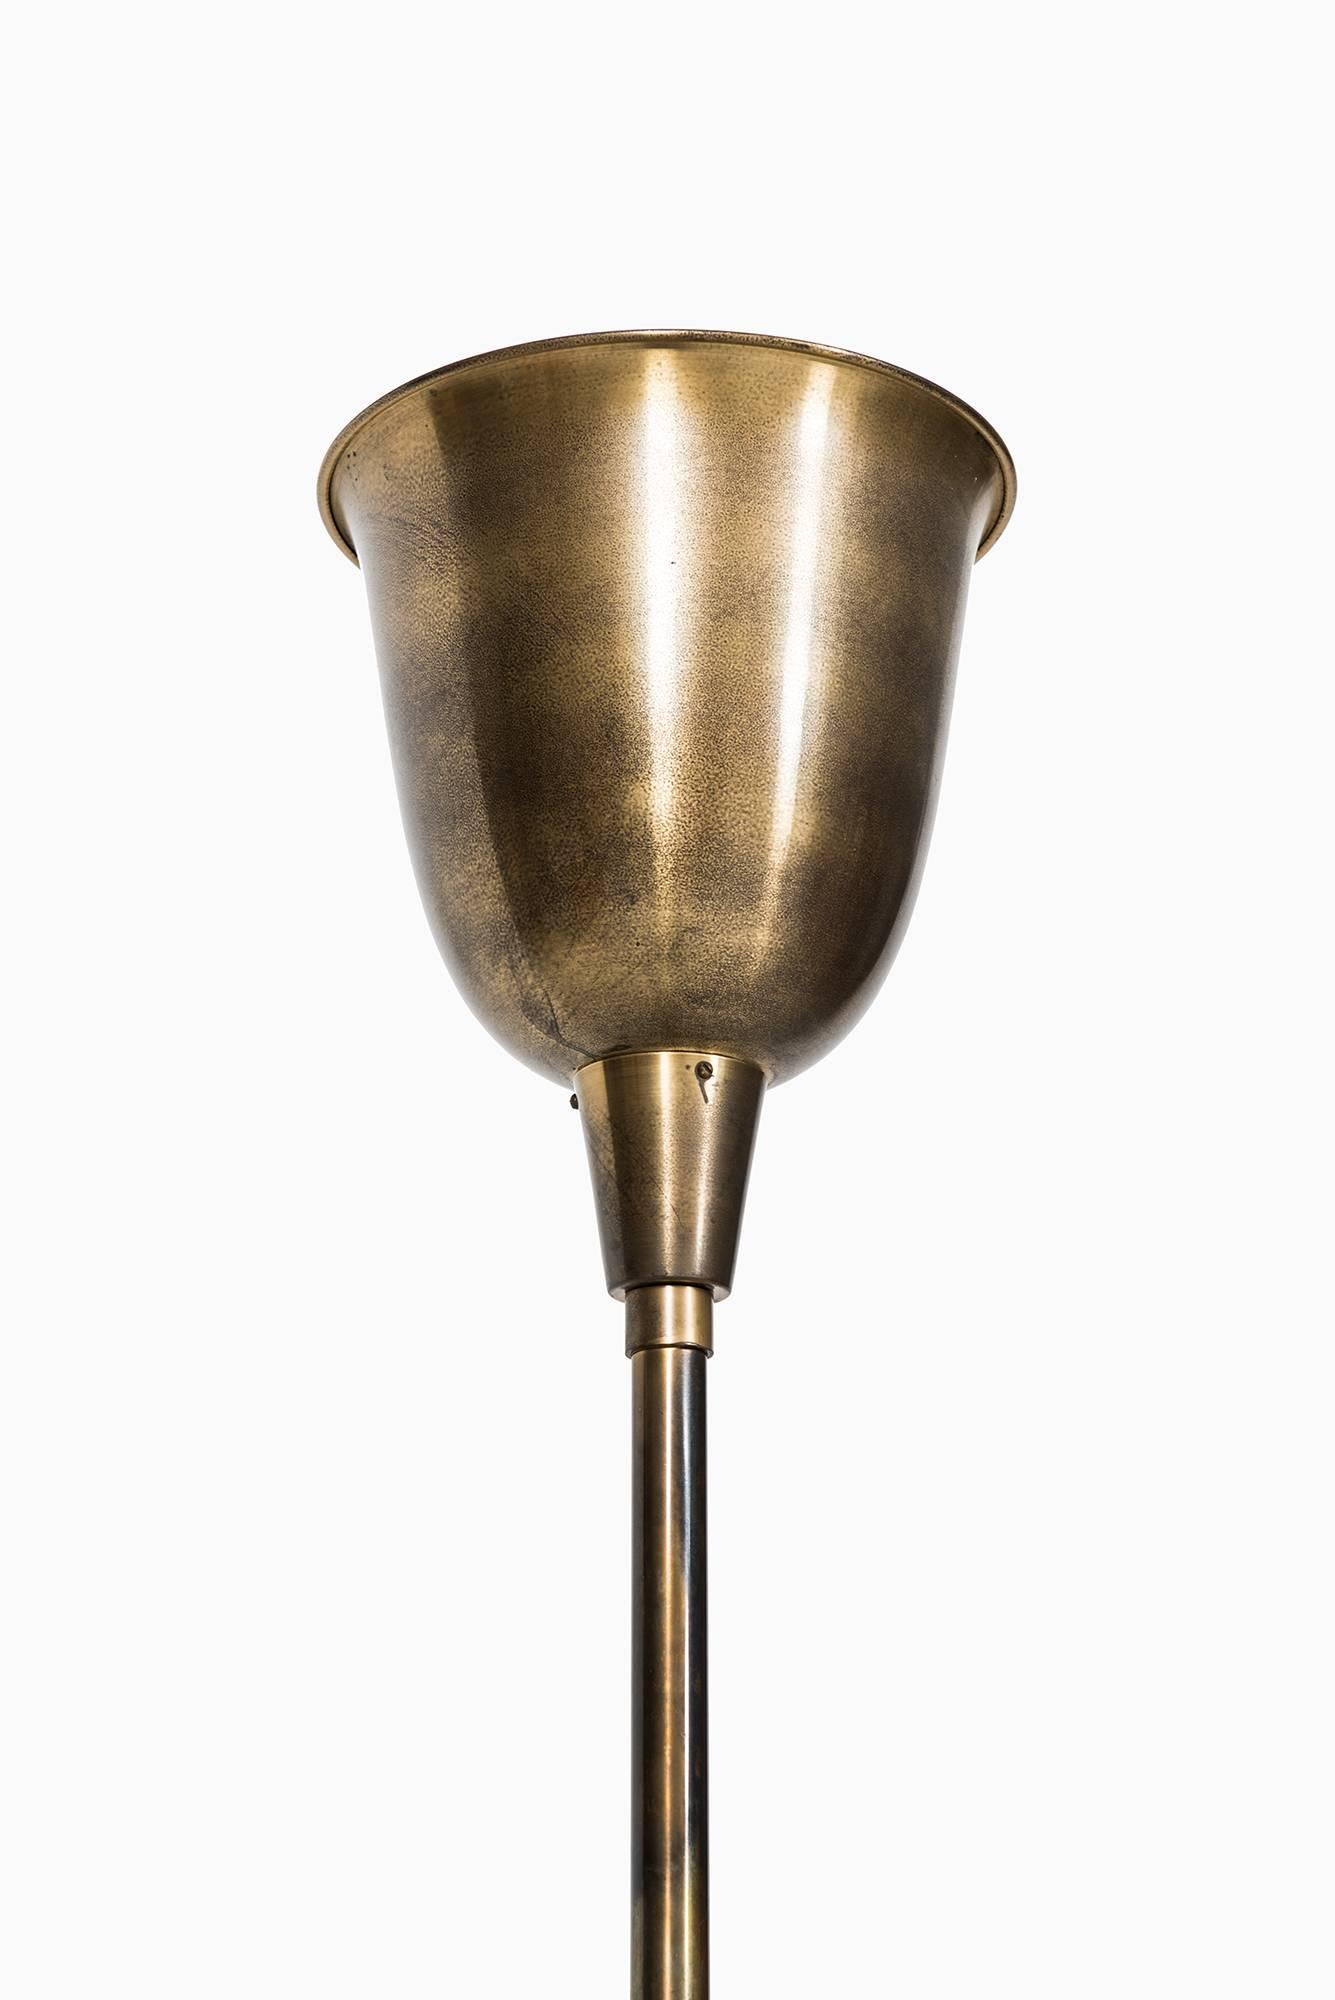 Mid-20th Century Floor Lamp or Uplight in Brass Produced in Denmark